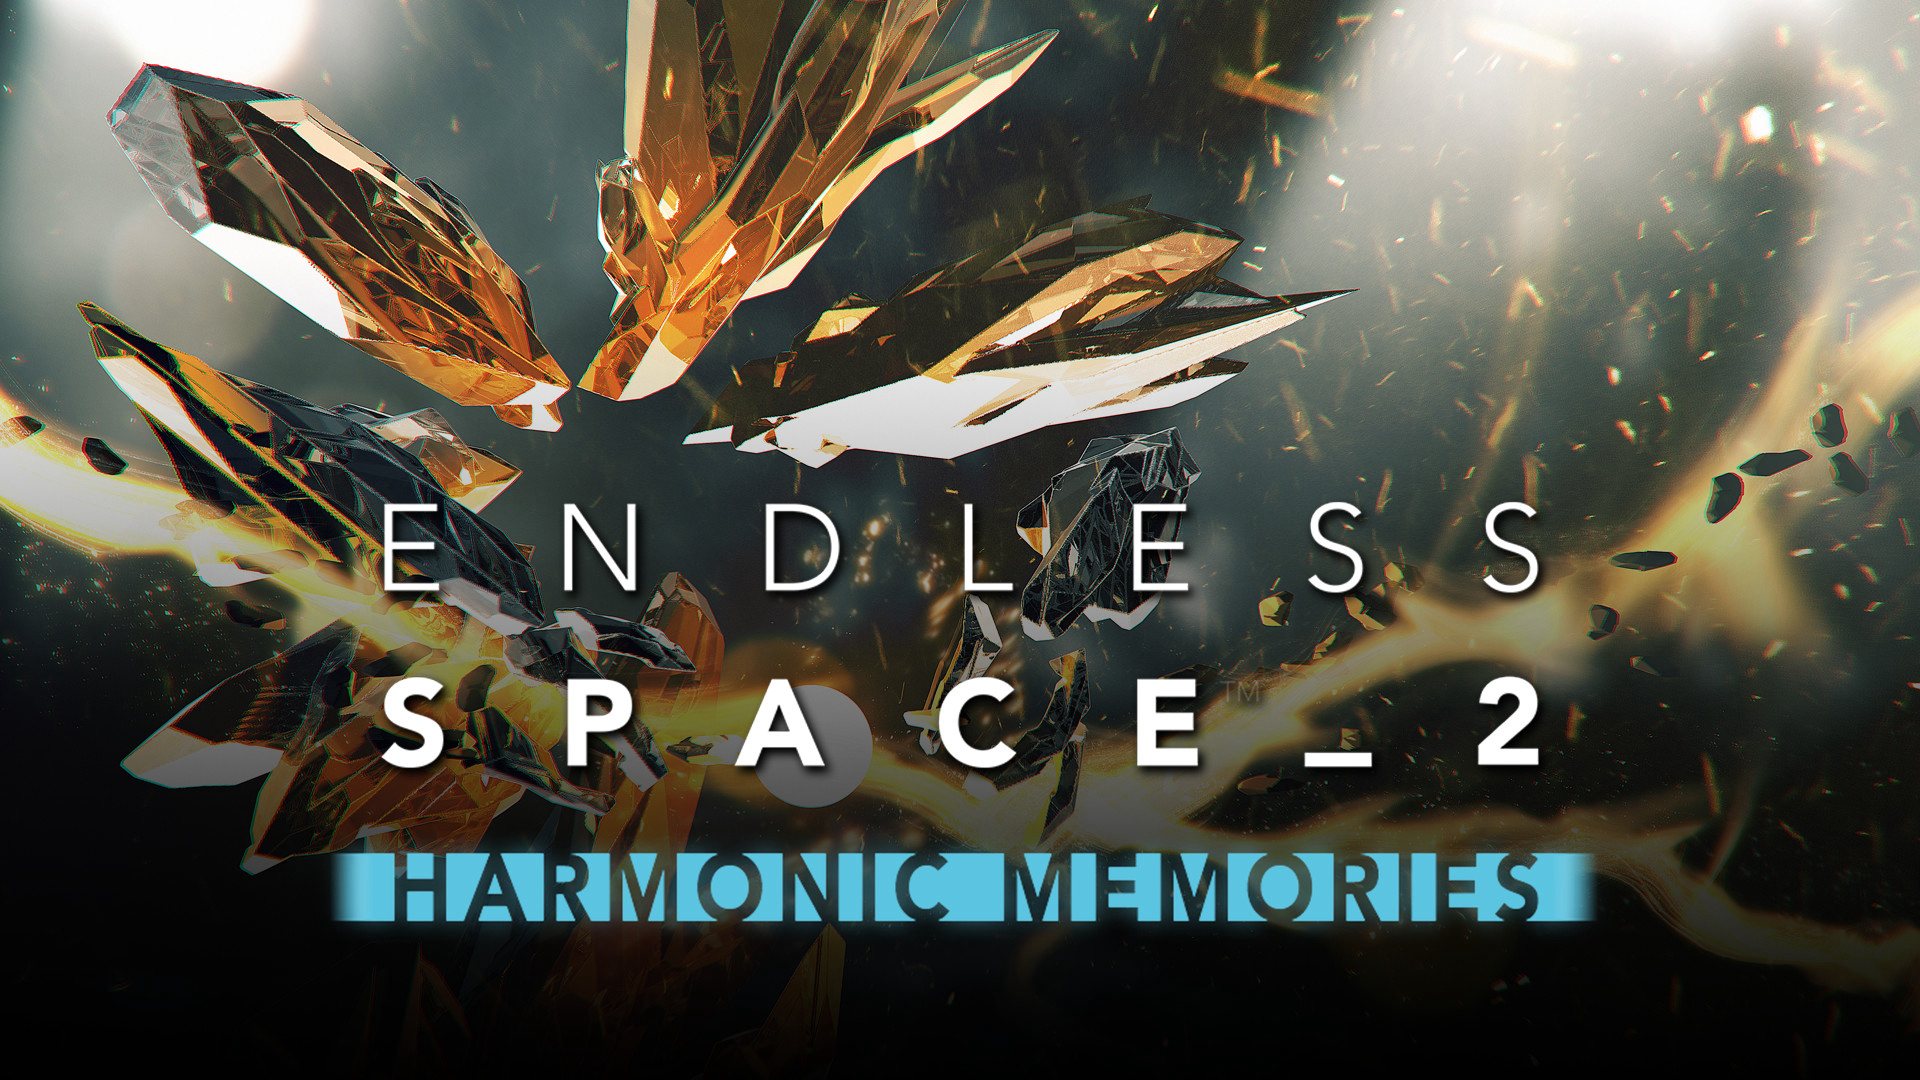 Endless Space 2 - Harmonic Memories DLC Steam CD Key [$ 1.45]